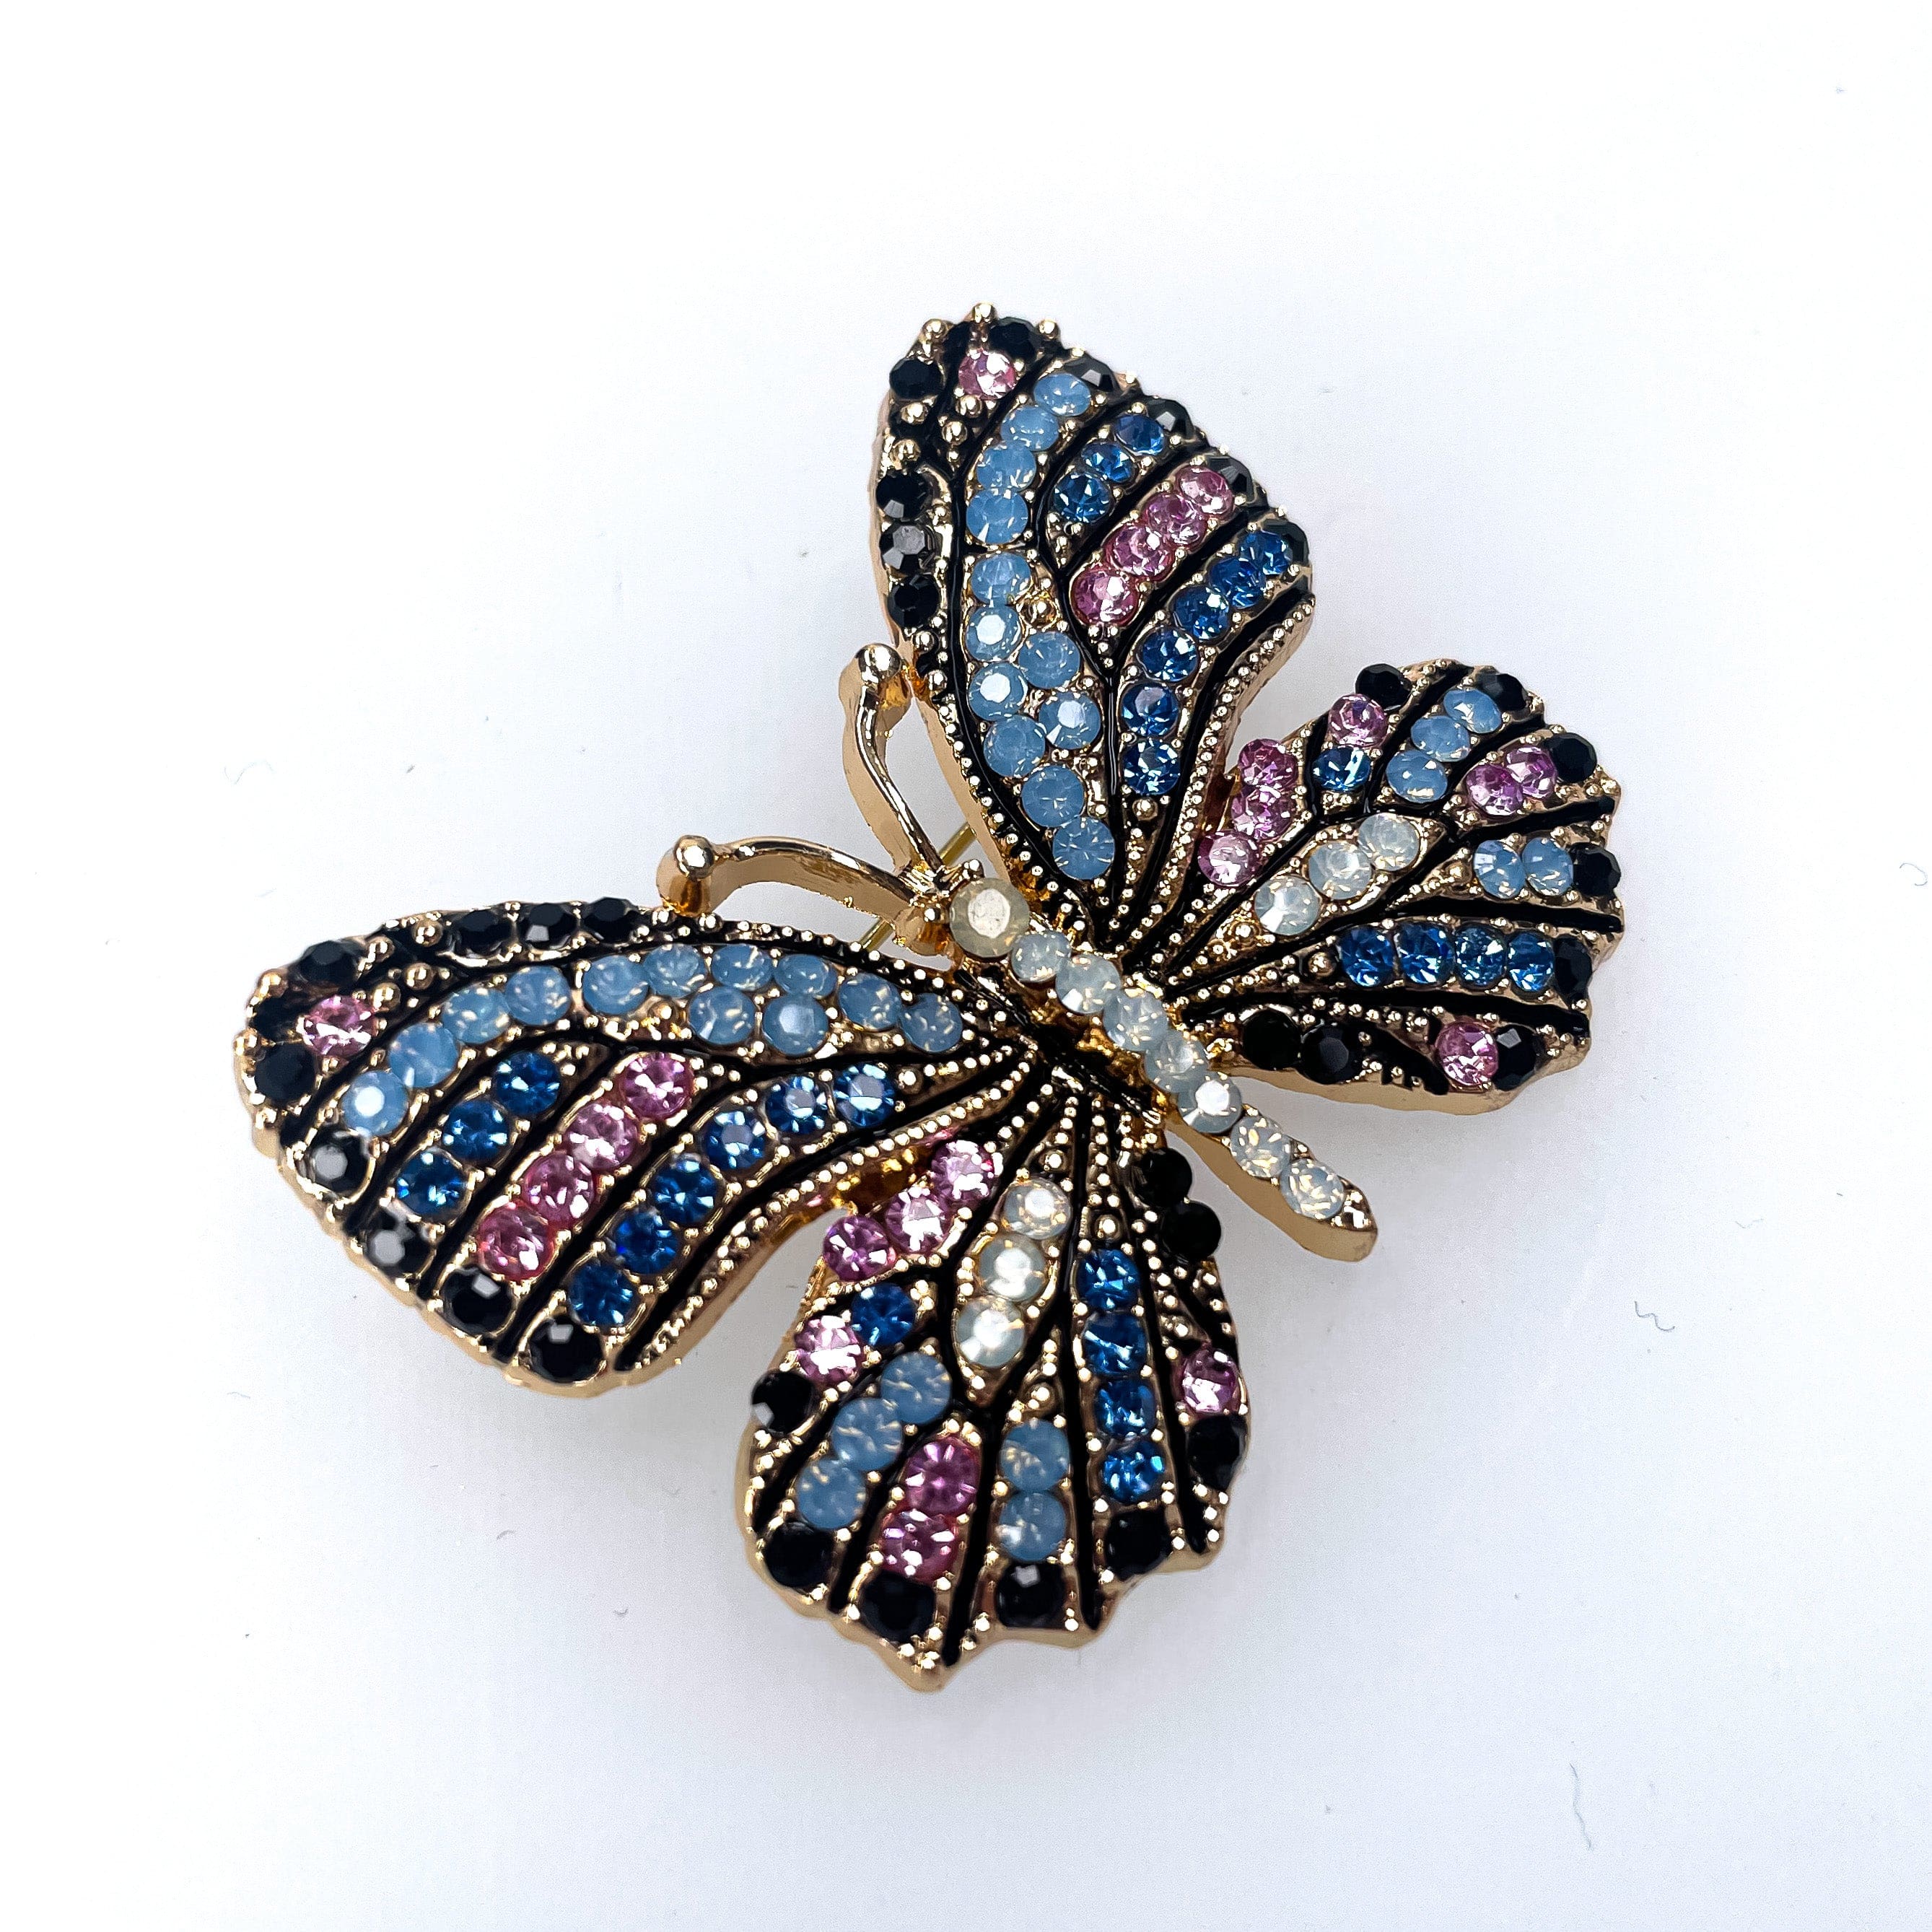 Machaon Butterfly Brooch - Blue